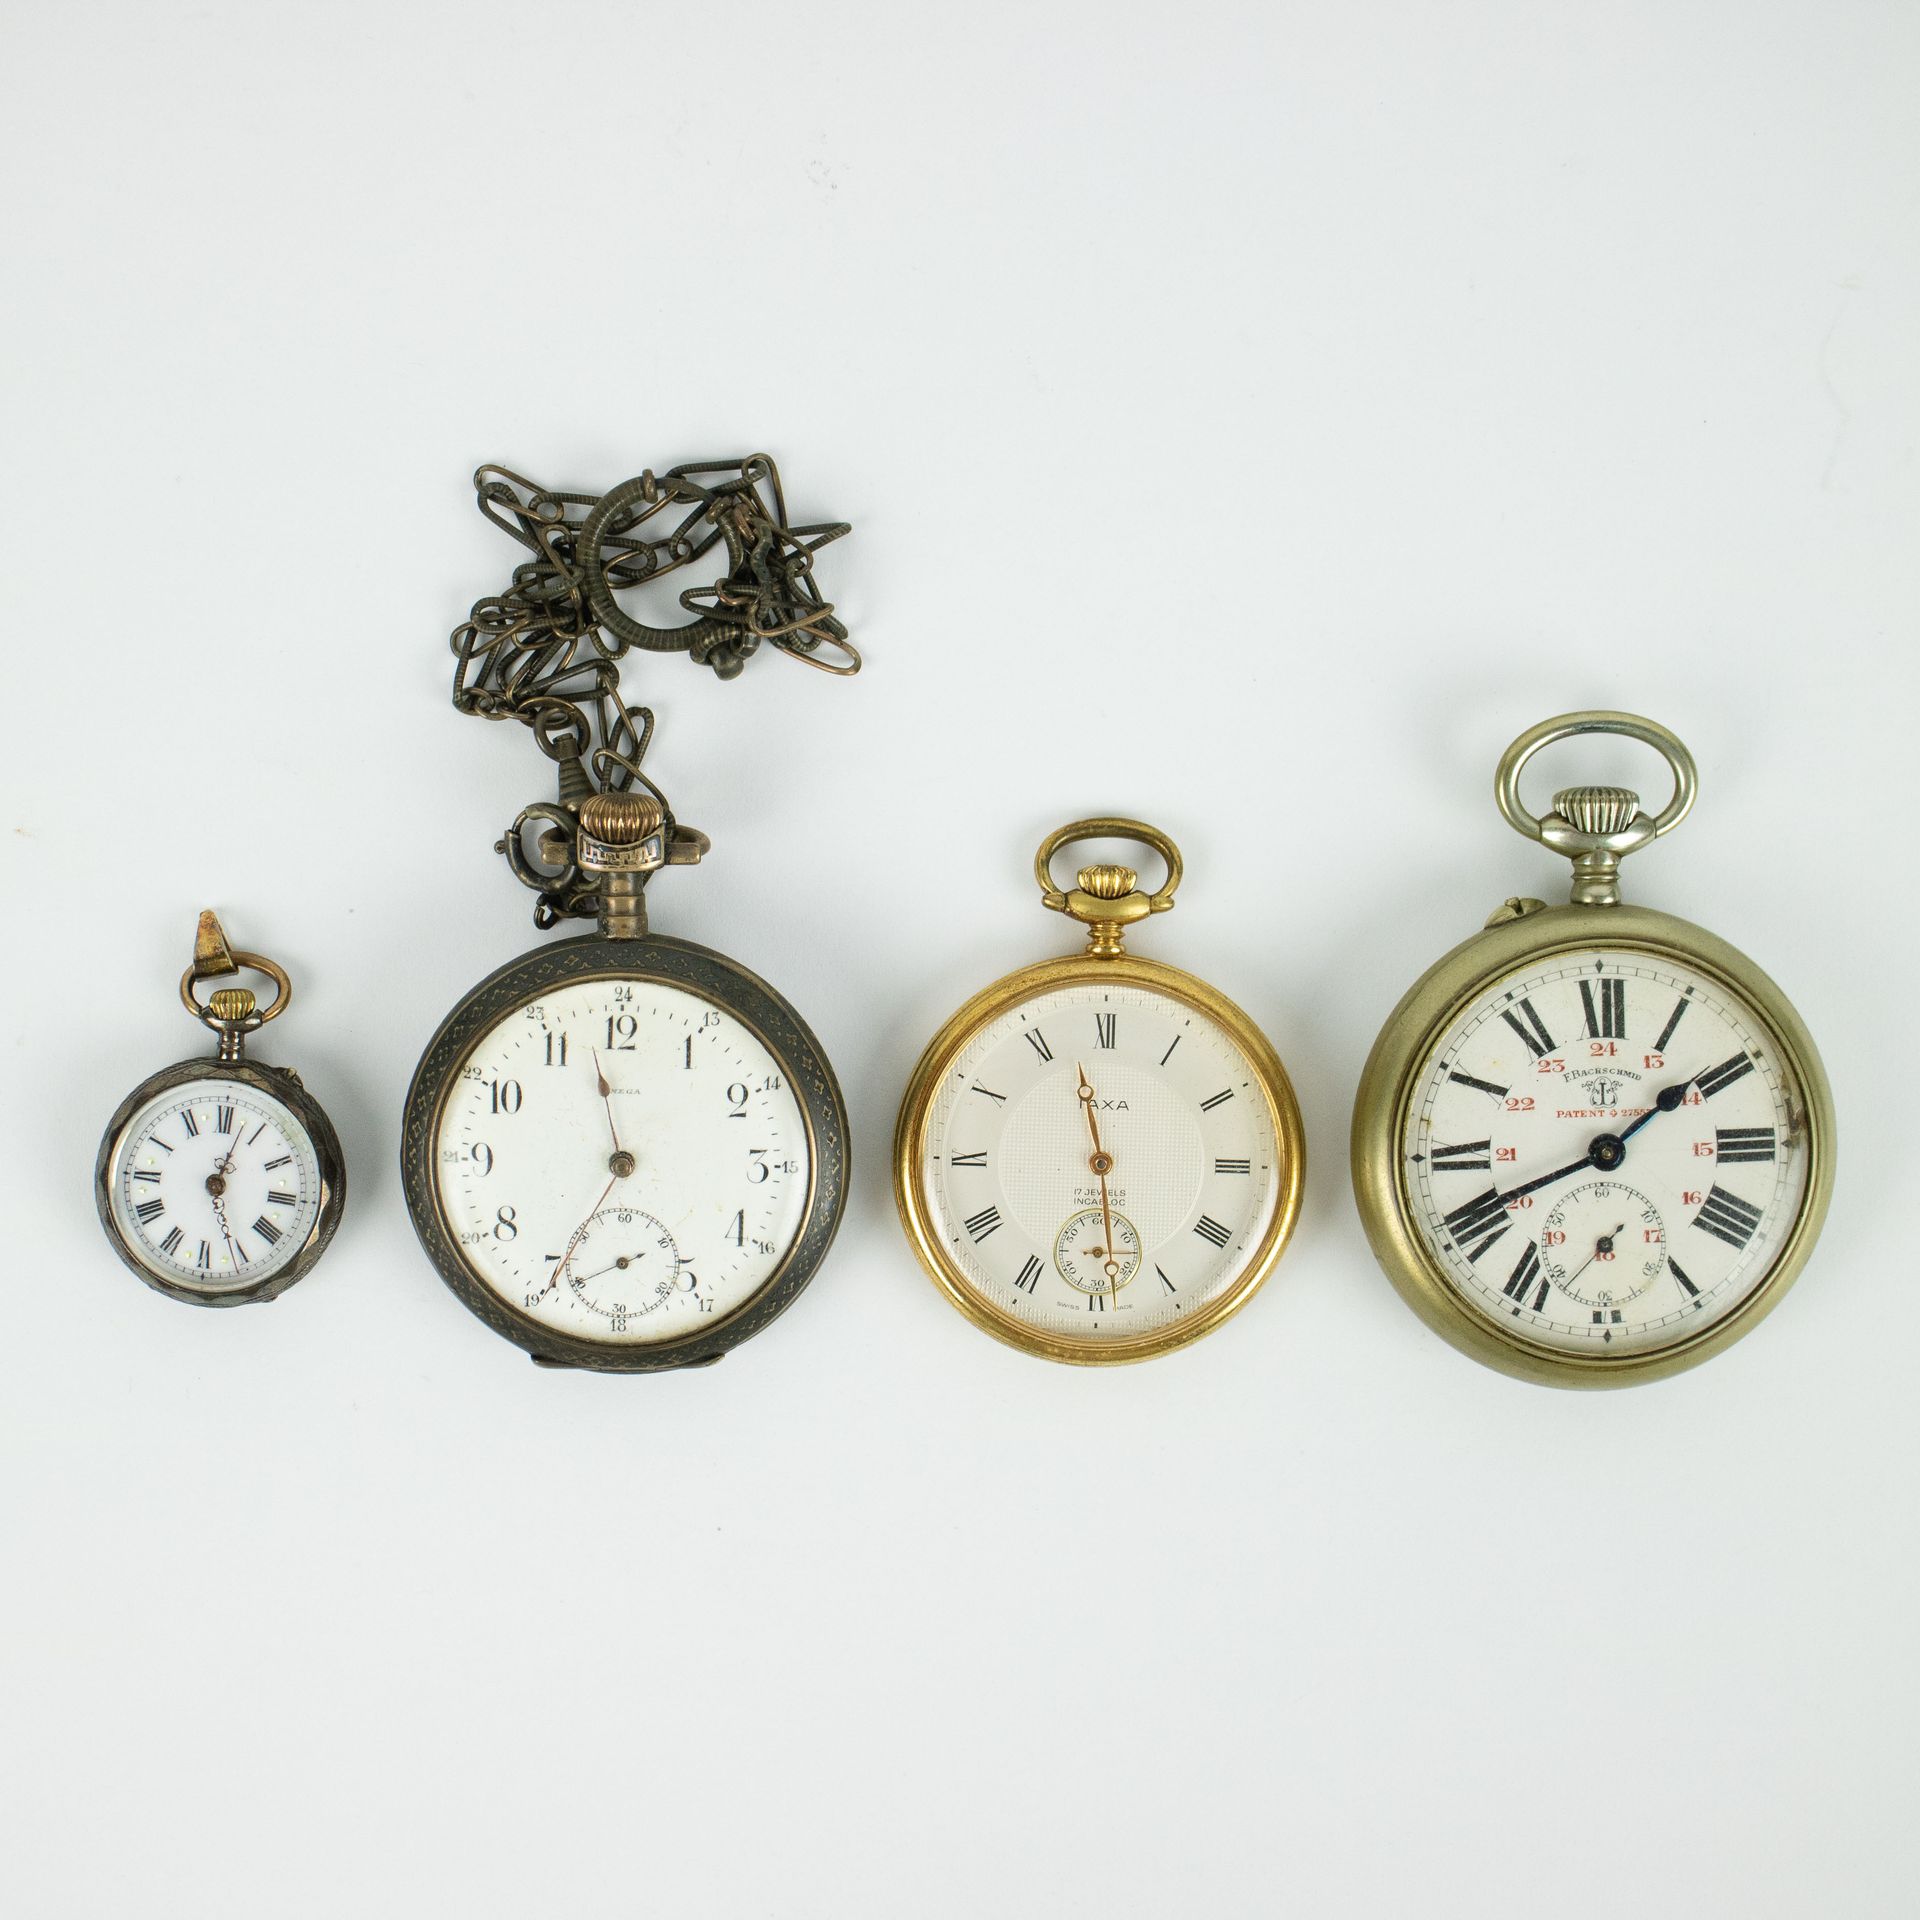 4 pocket watches A.O. A F. BACHSCHMID - Taschenuhr - 1900, IAXA - Taschenuhr Swi&hellip;